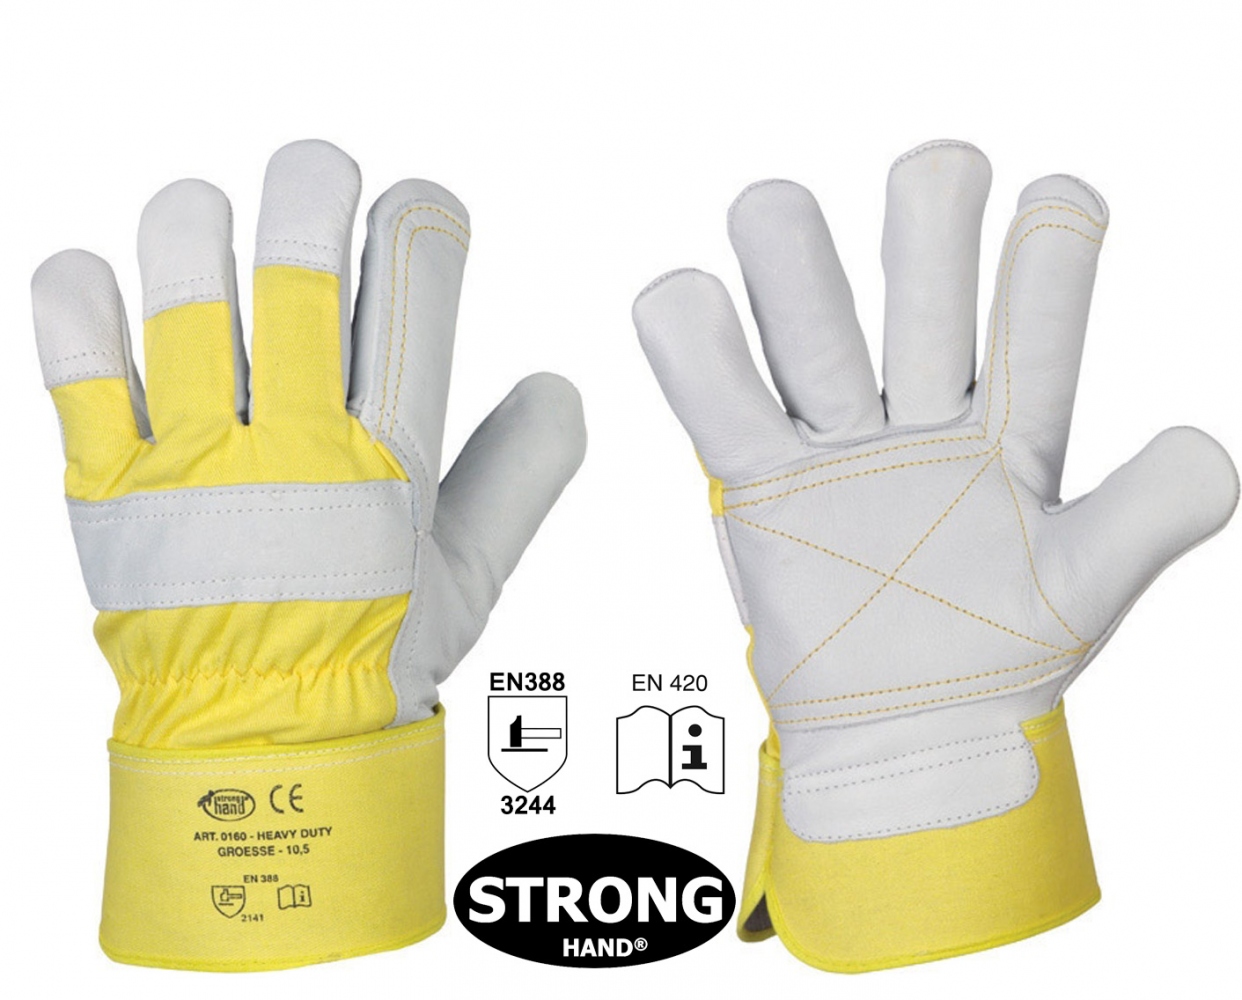 pics/Feldtmann 2016/Handschutz/stronghand-0168-heavy-duty-leather-safety-gloves.jpg